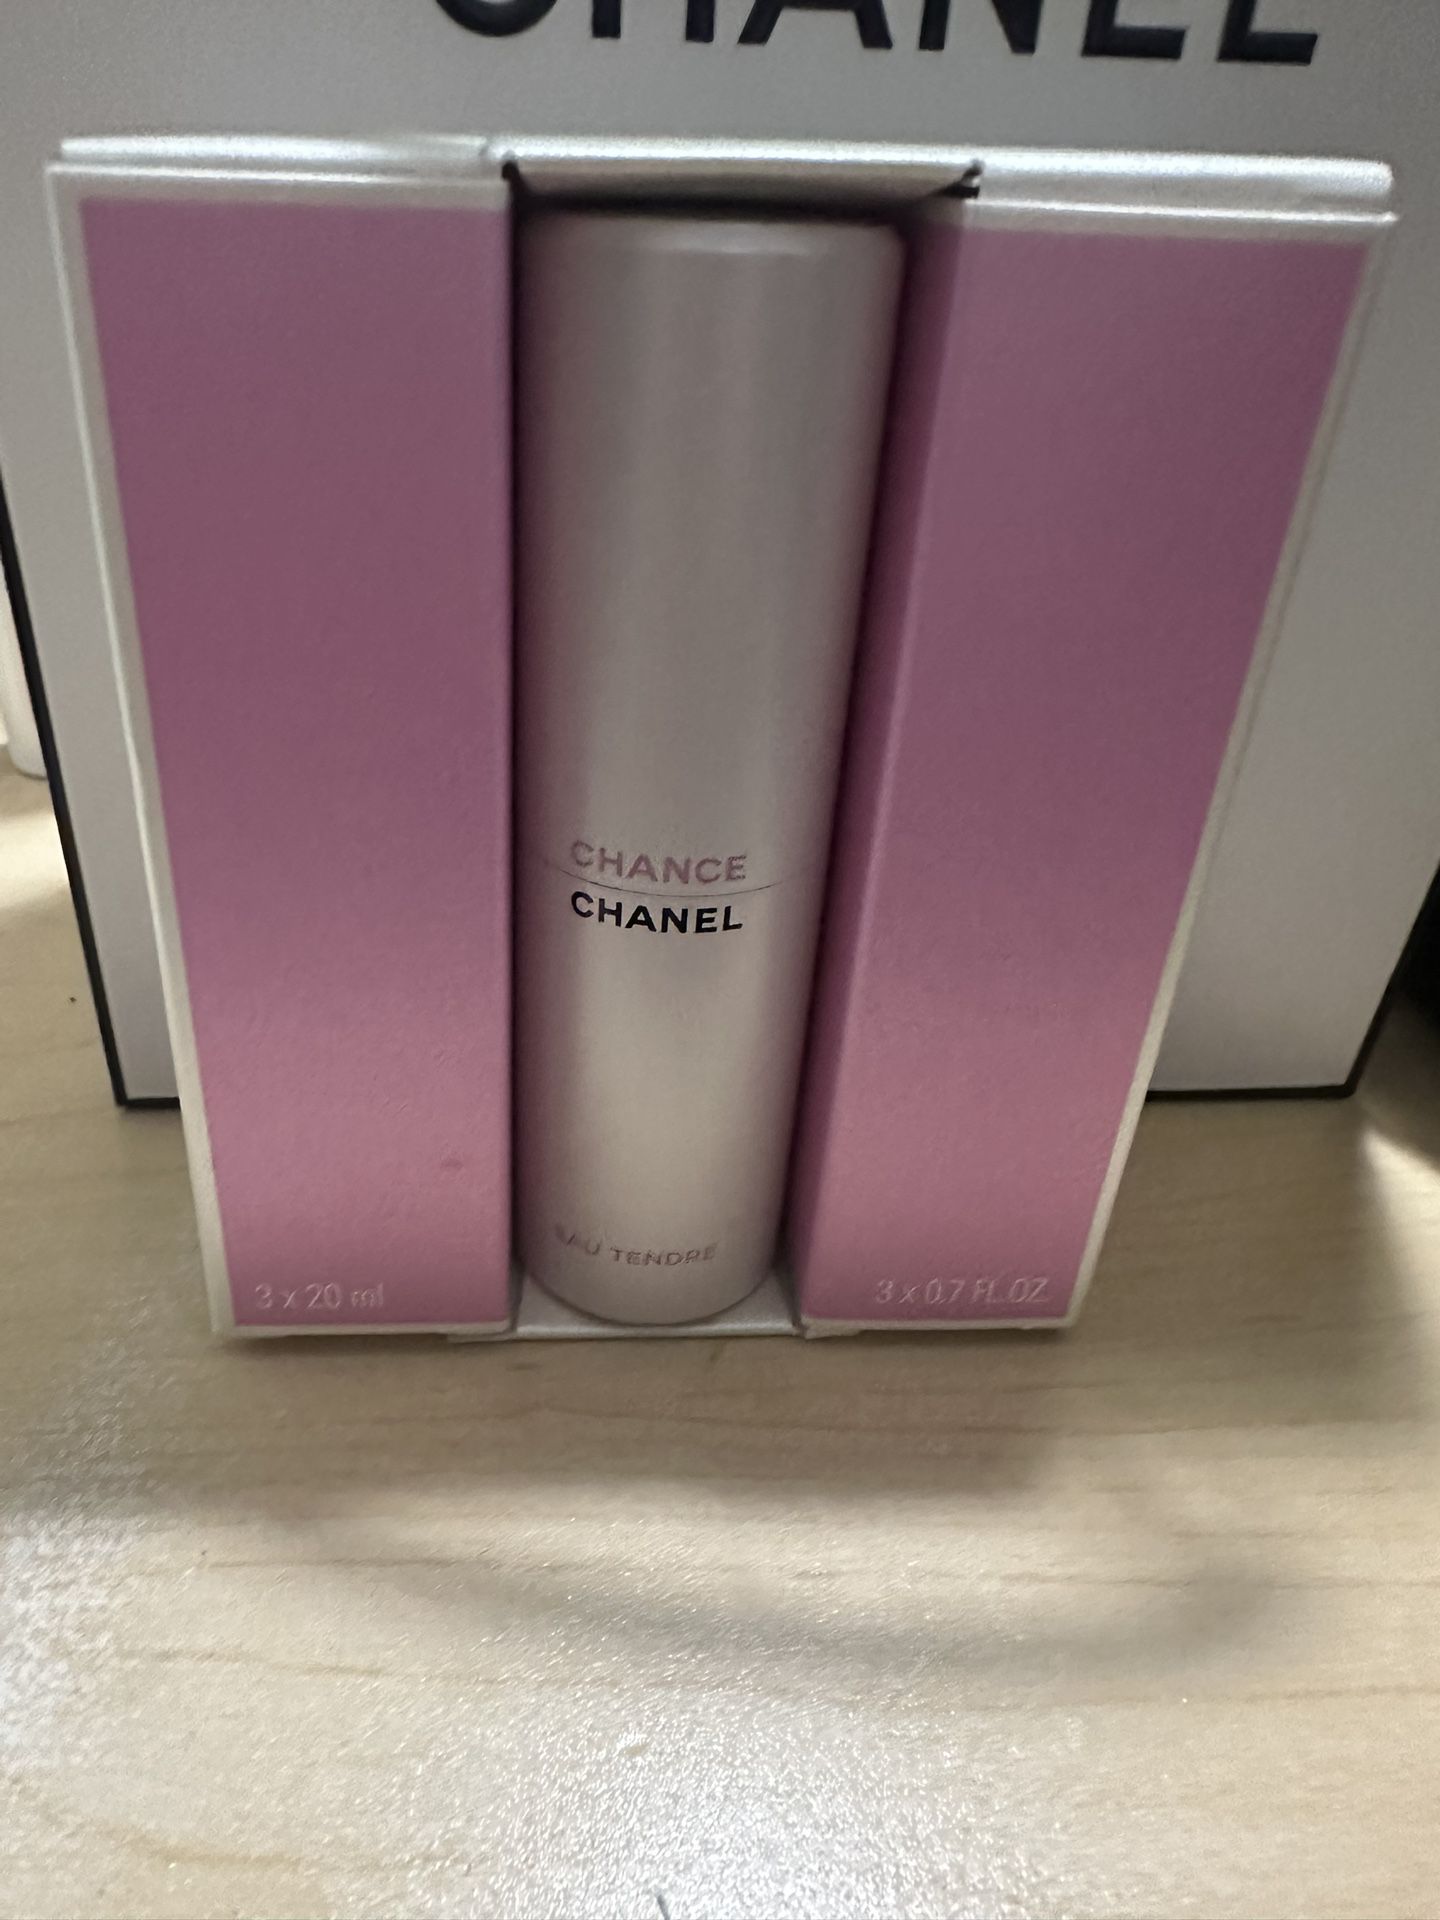 Chance Chanel Travel Size Perfume 